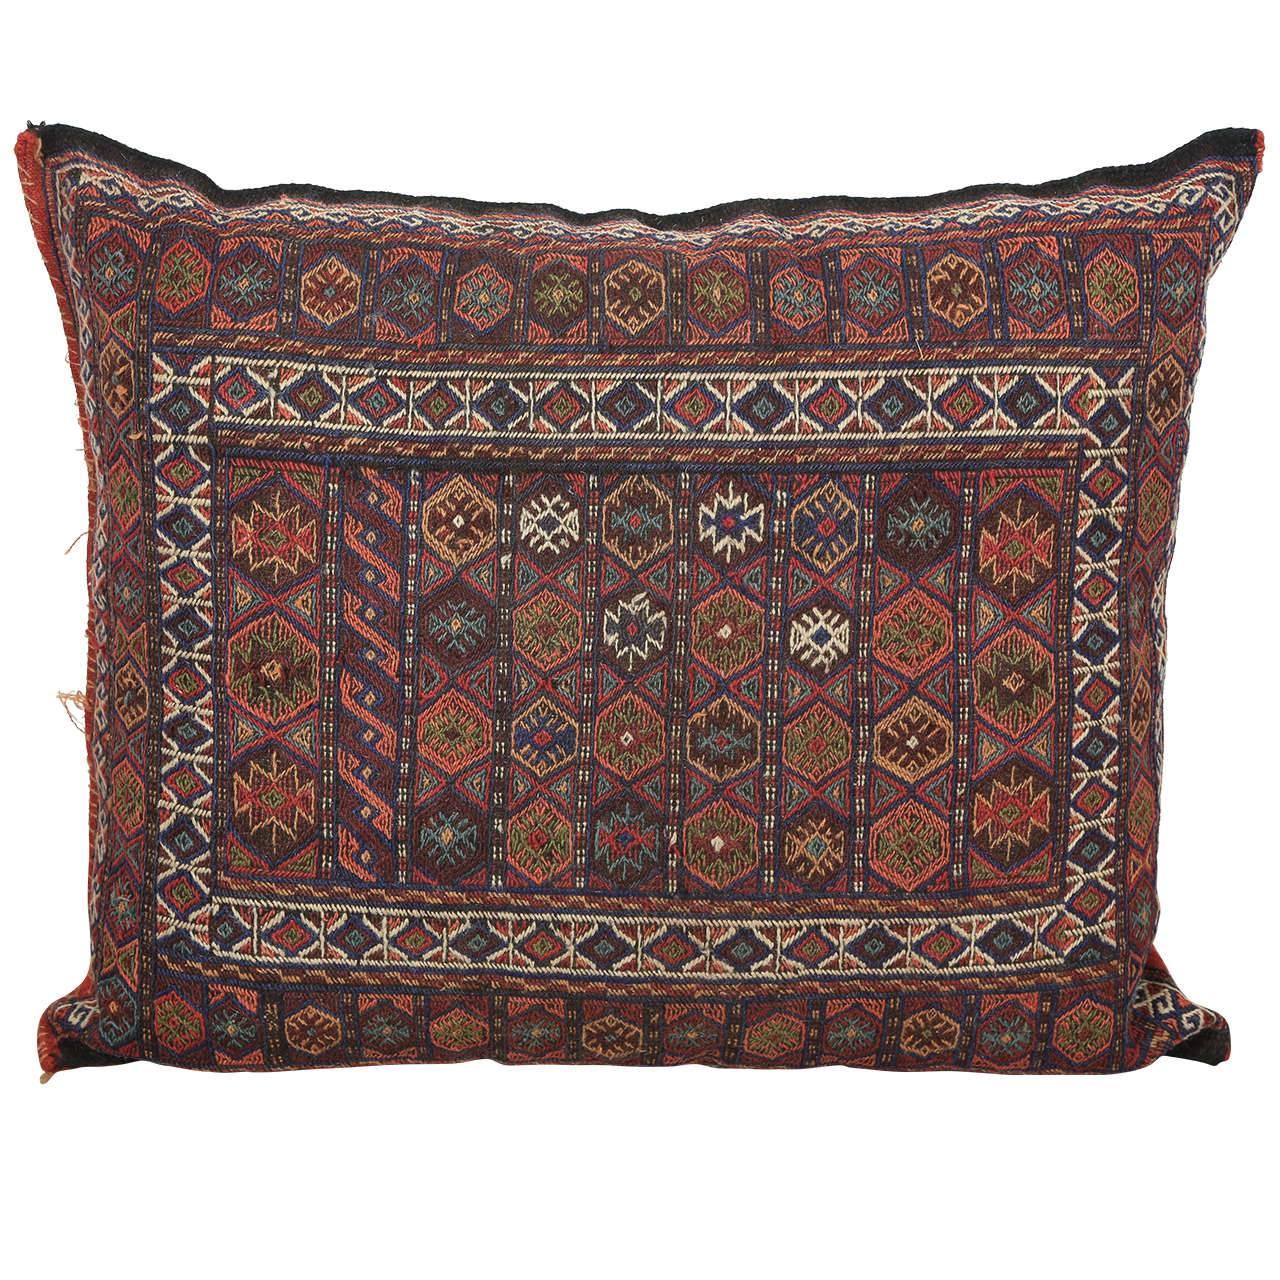 Turkish Tribal Kilim Floor Pillow